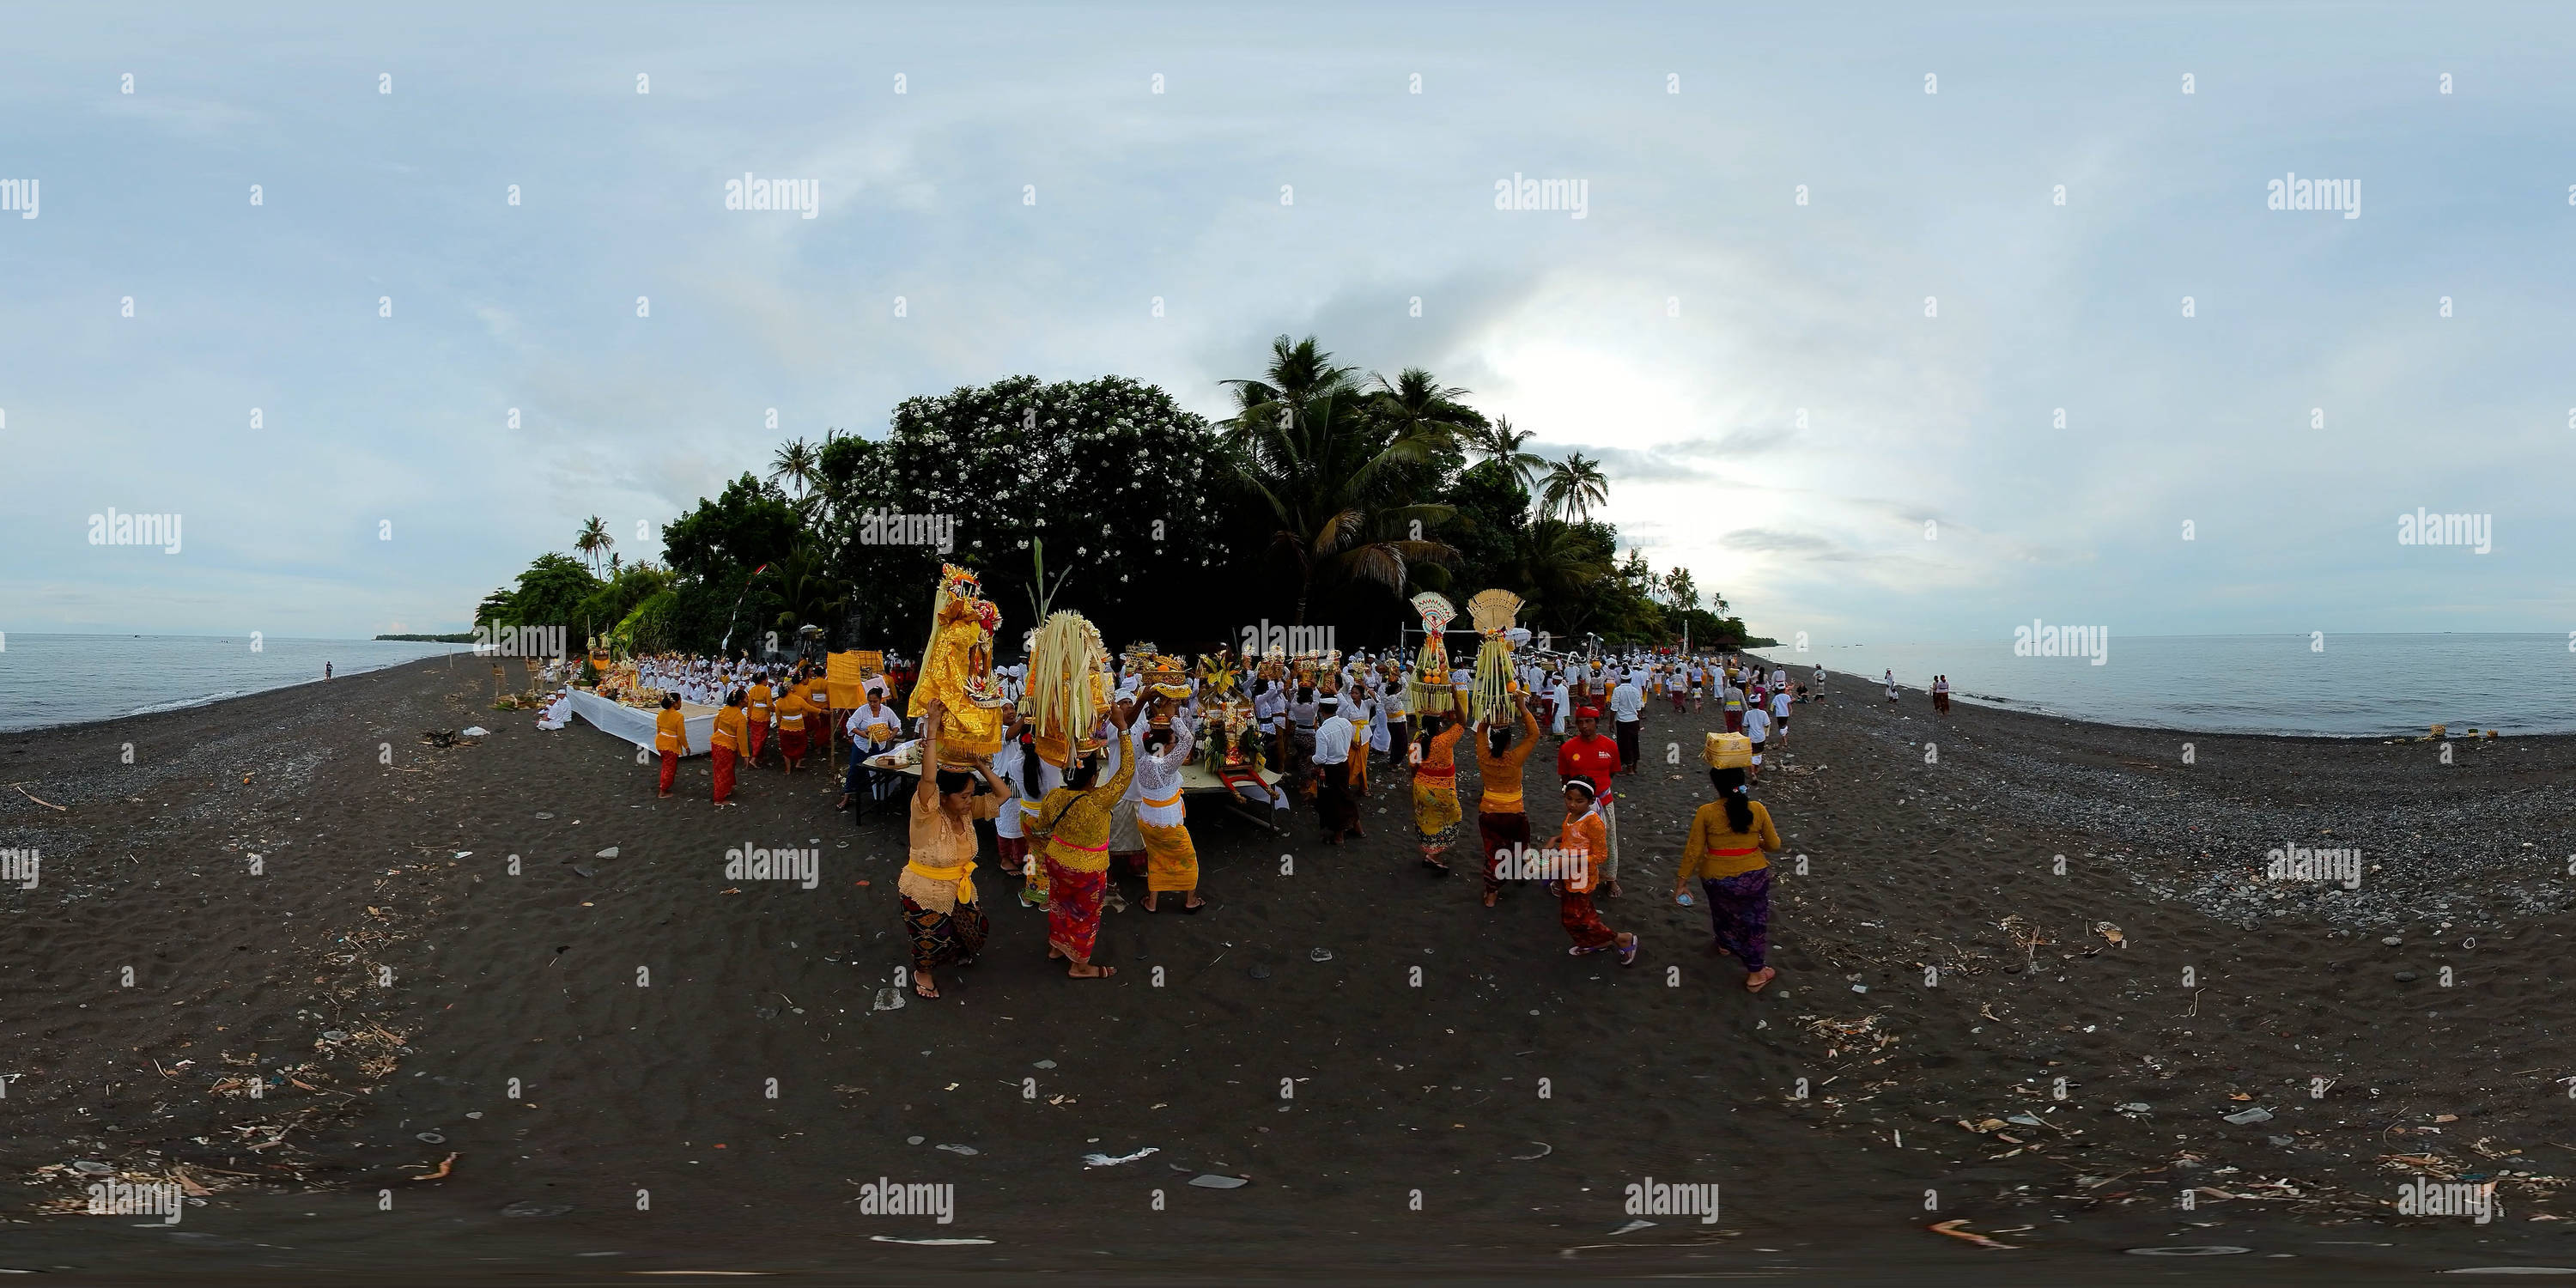 360 degree panoramic view of Religious ceremony in Bali. 360 panorama.